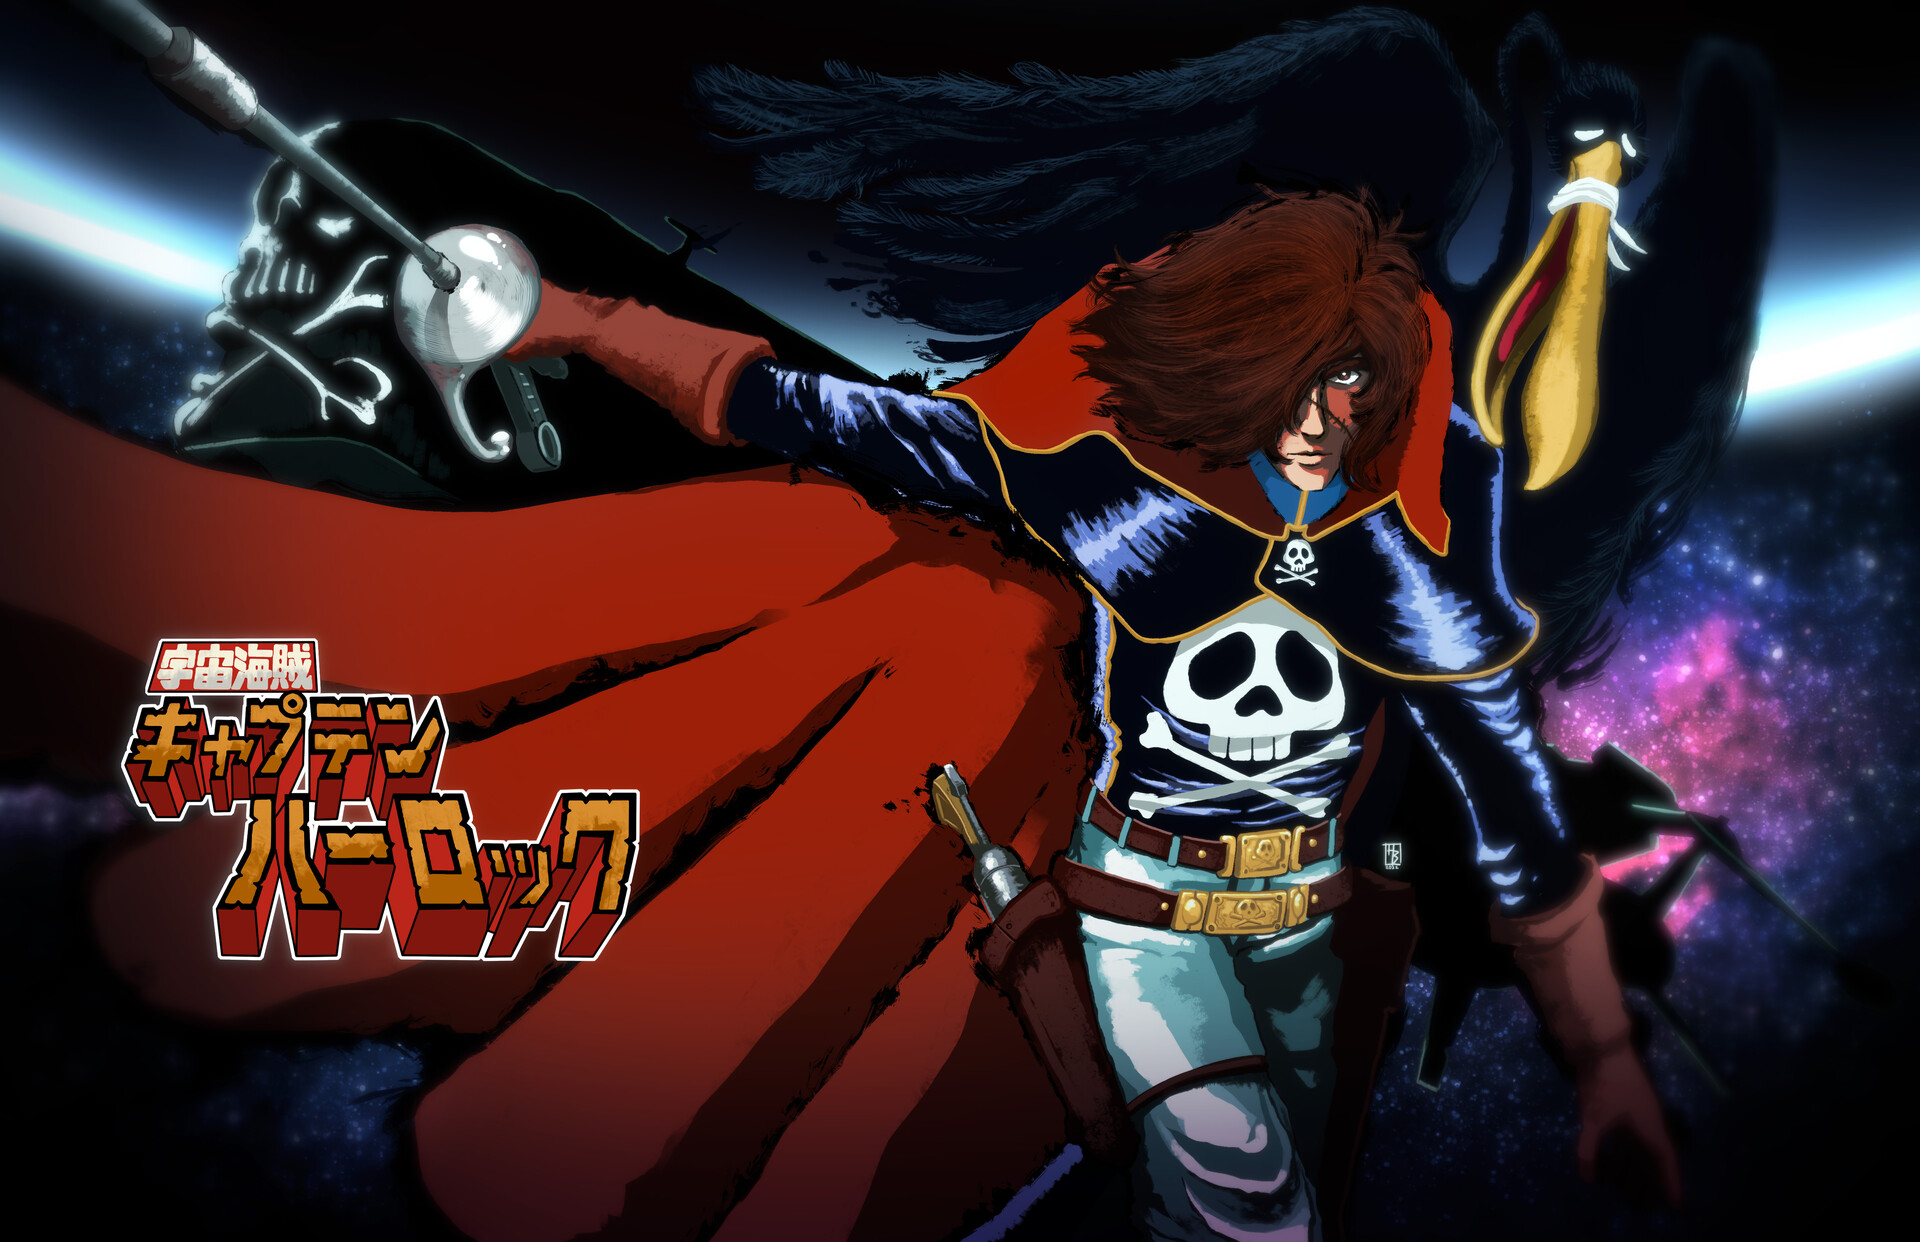 Buy Original Captain Harlock Anime Poster Online